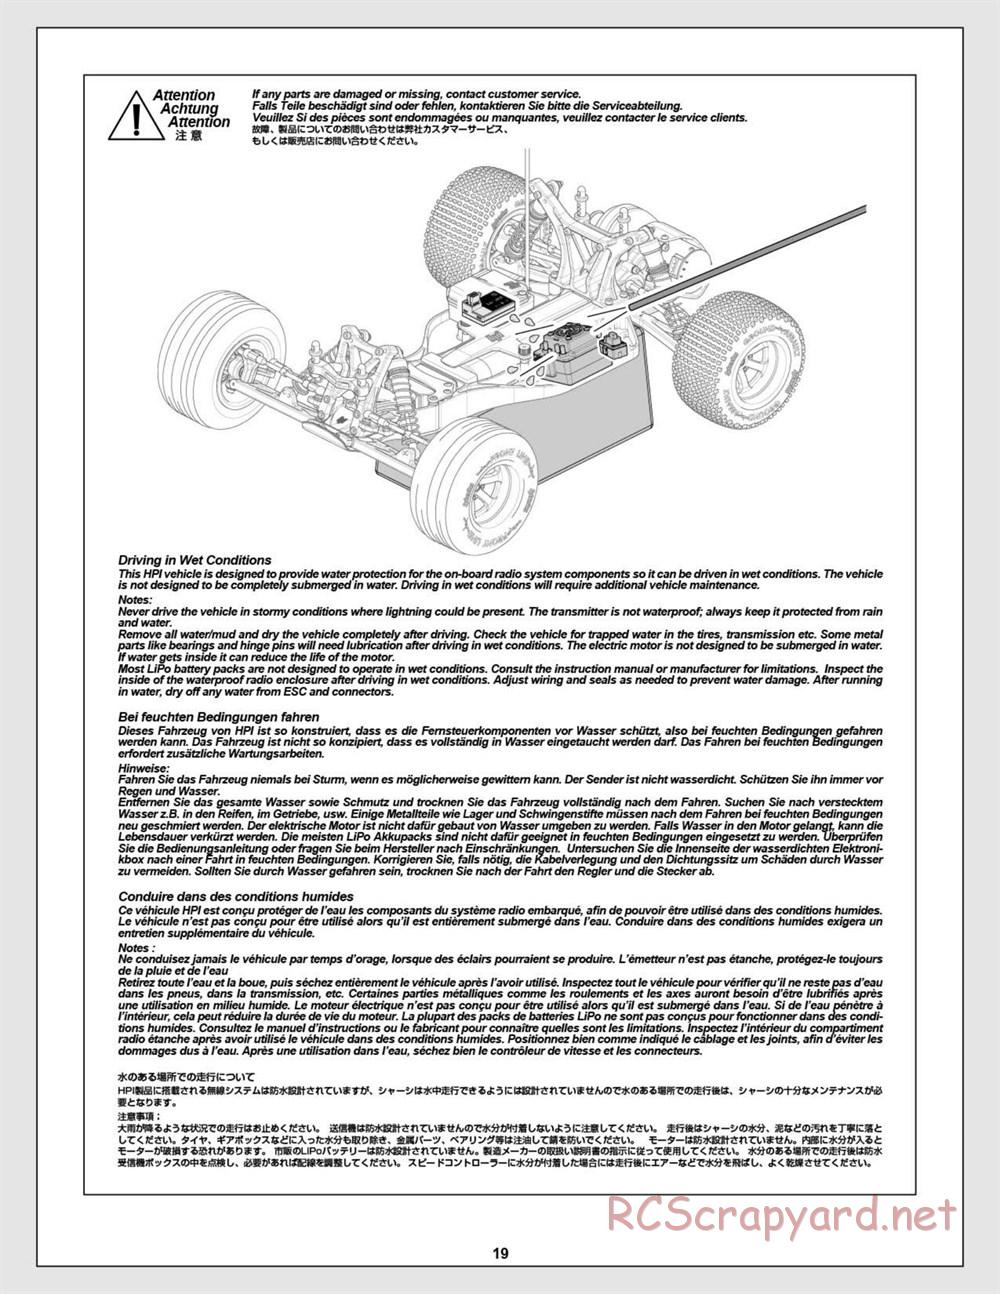 HPI - E-Firestorm 10T Flux - Manual - Page 19